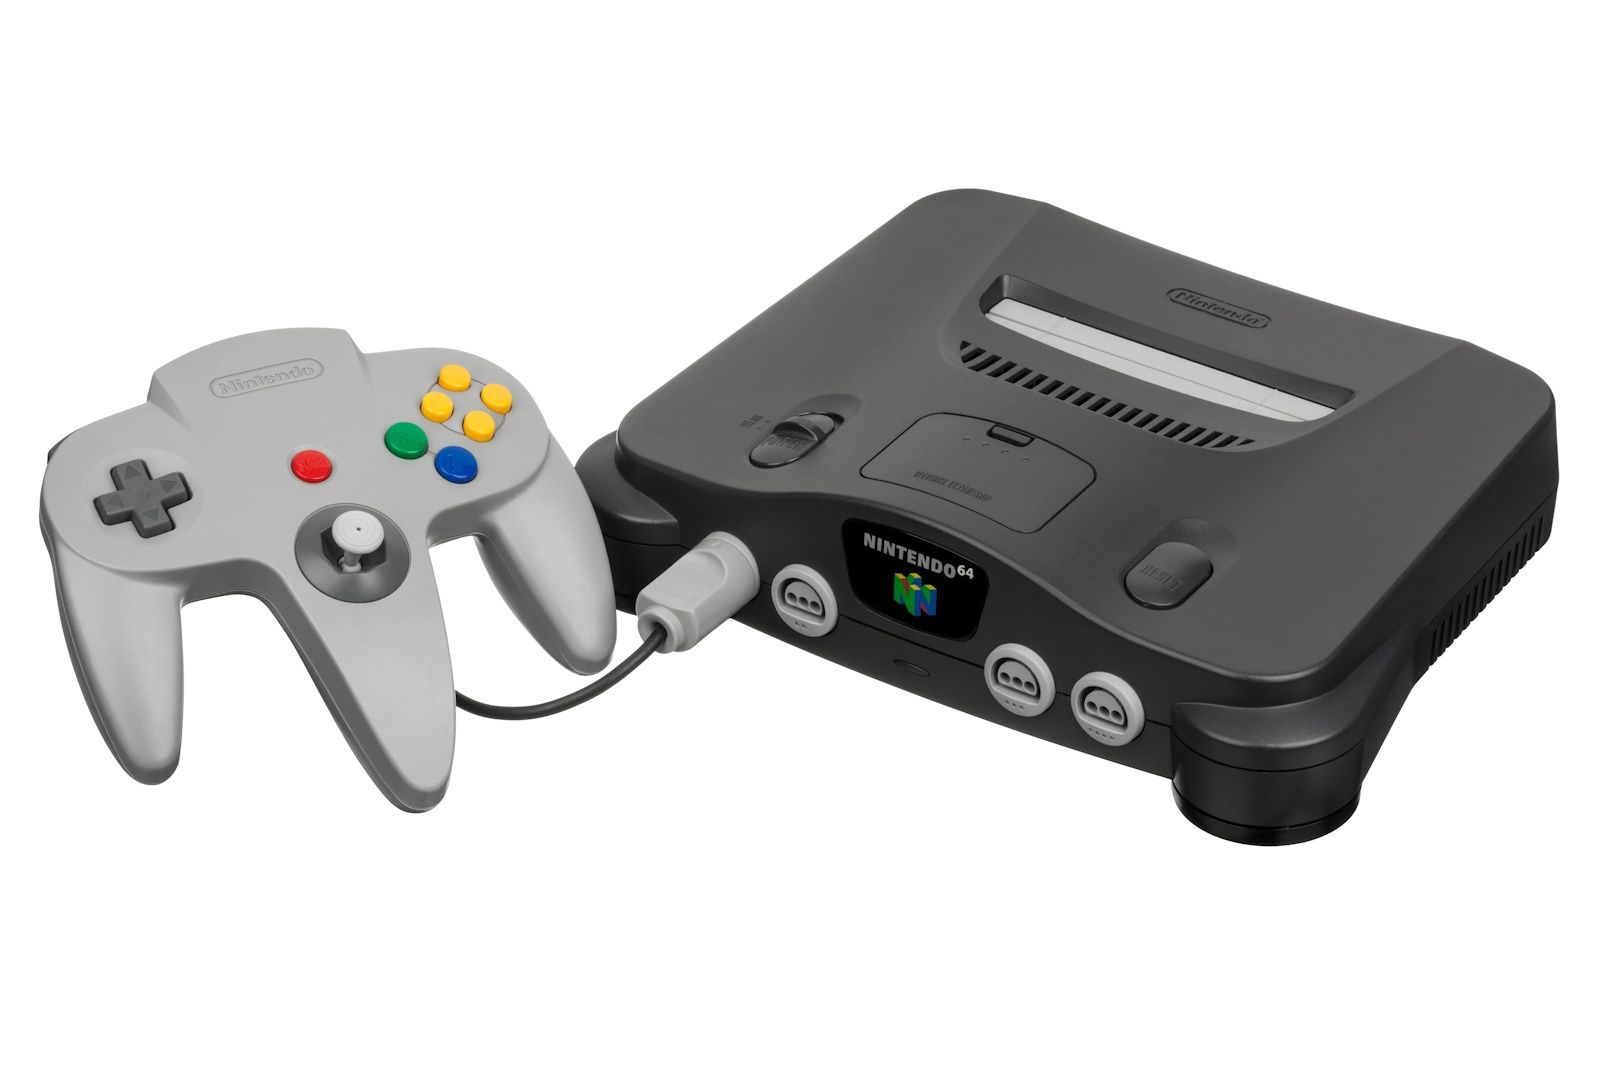 Nintendo 64 (N64) console